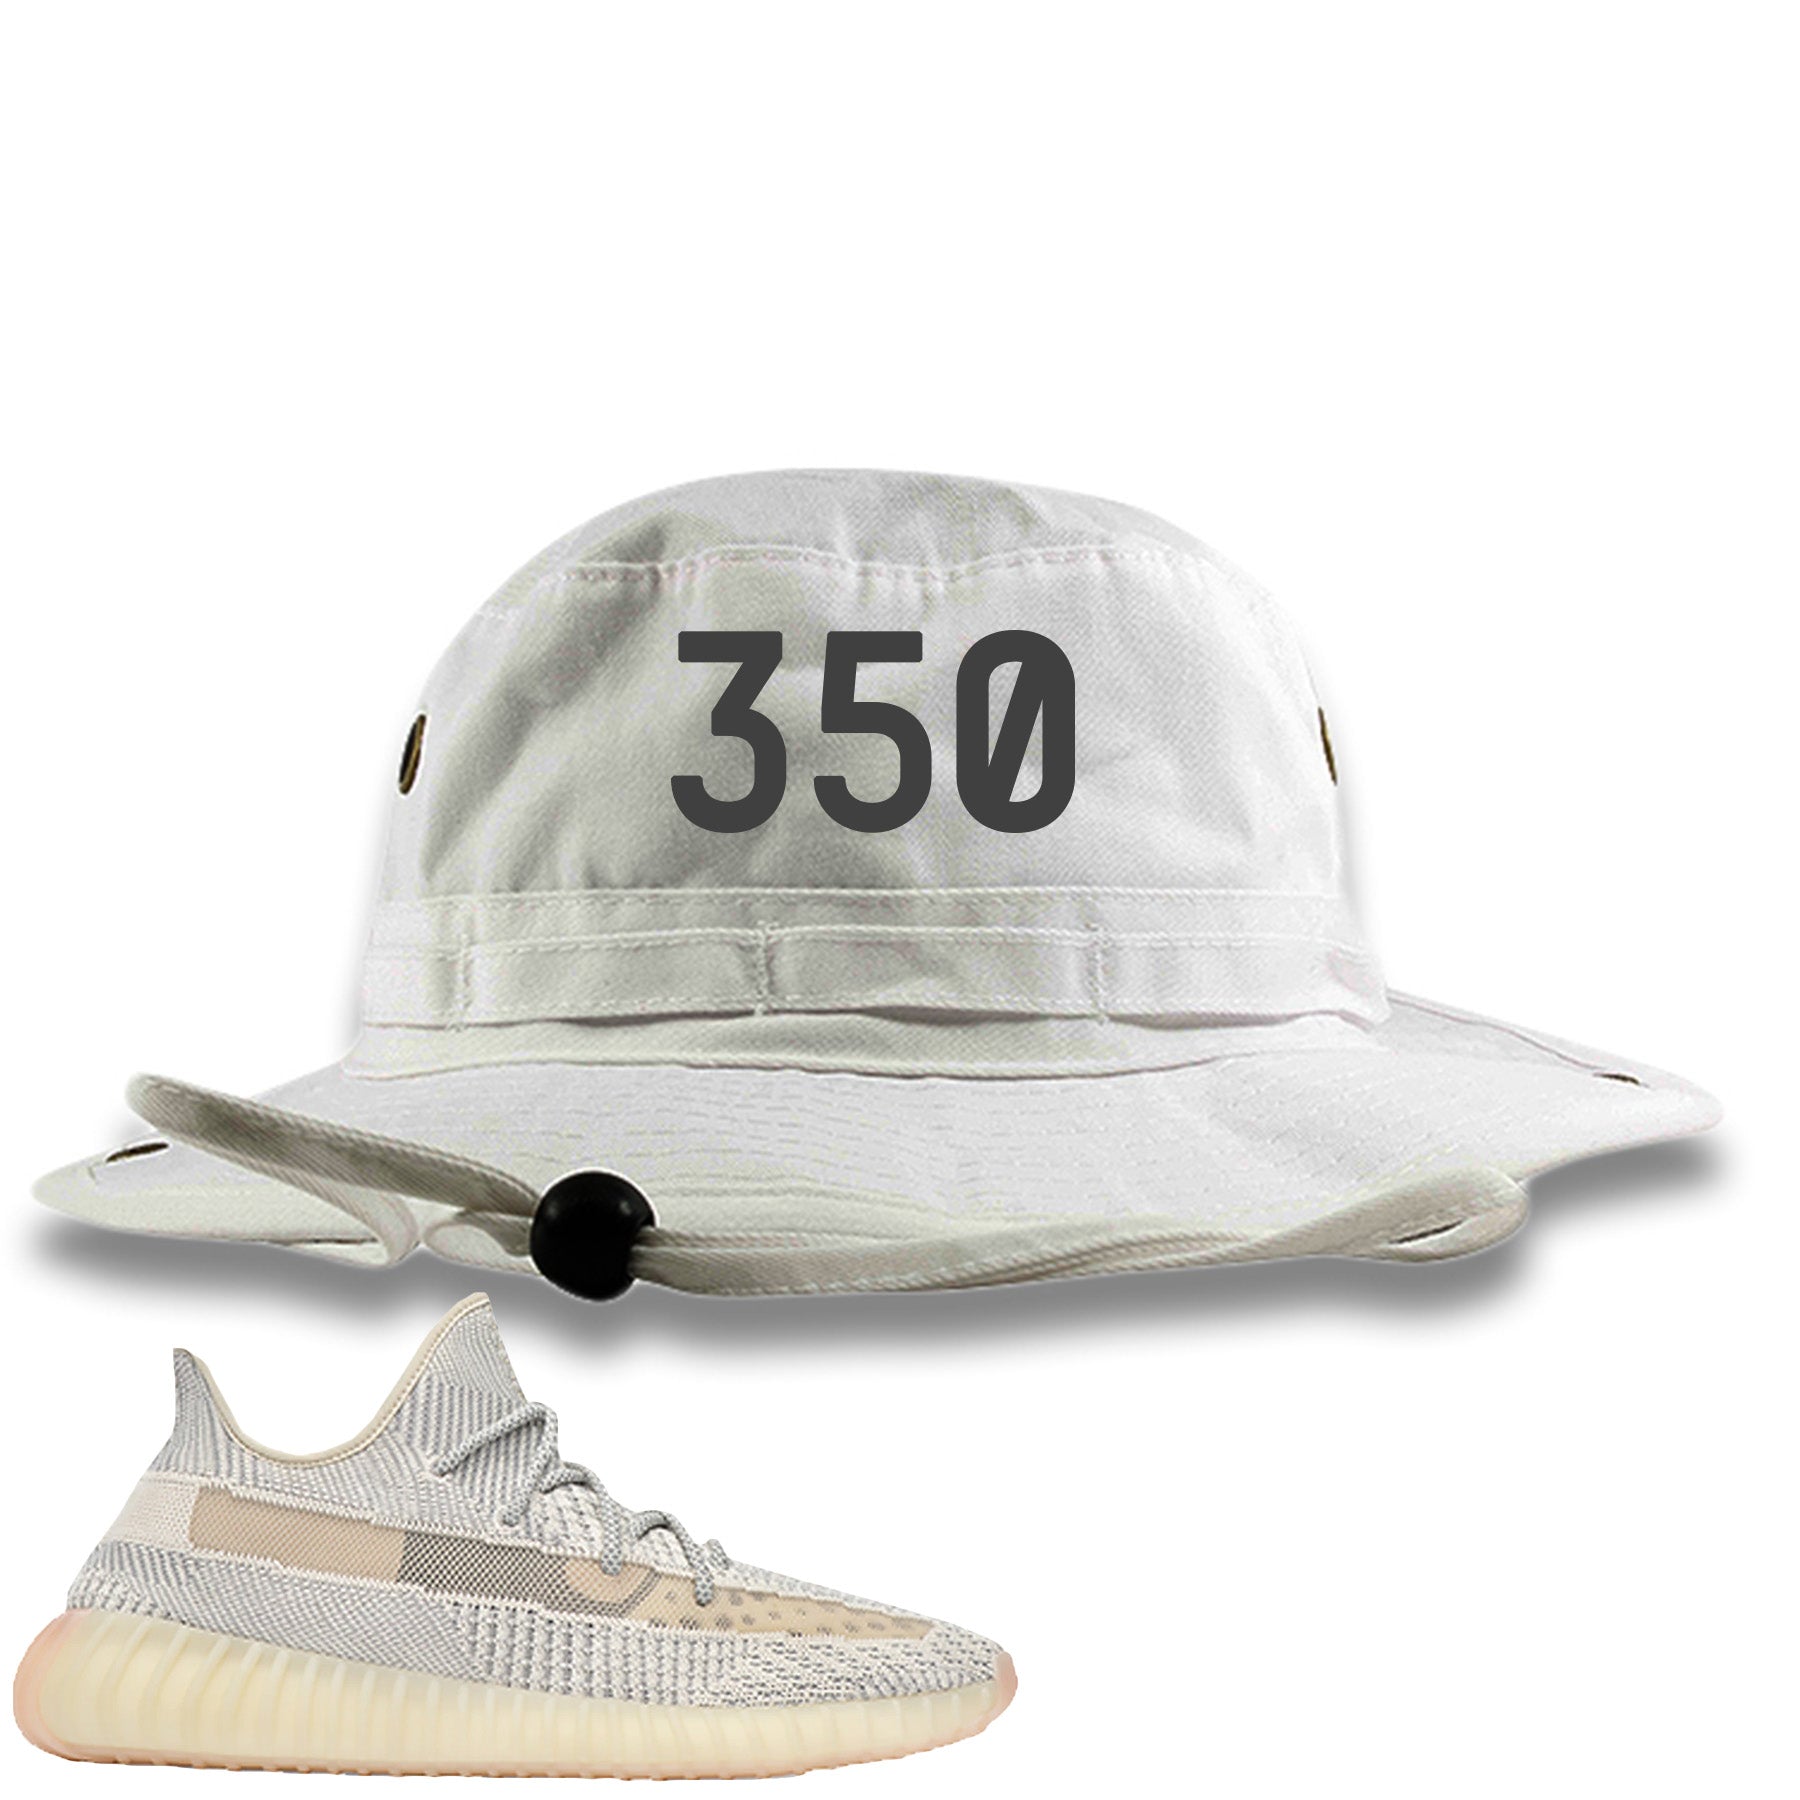 adidas yeezy hat